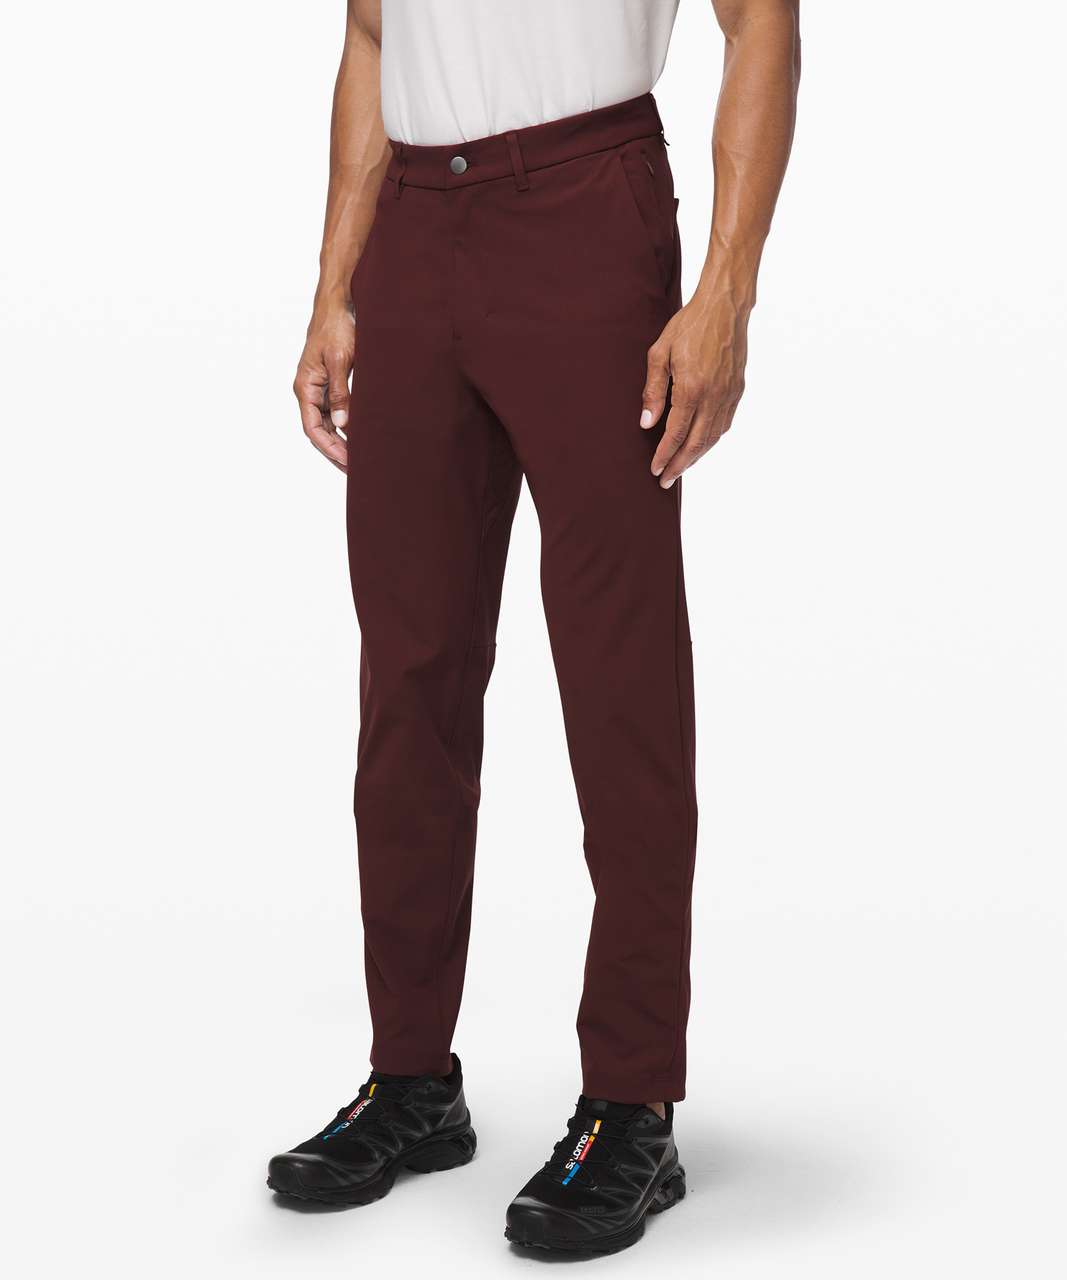 Lululemon Athletica Maroon Burgundy Active Pants Size 8 - 58% off